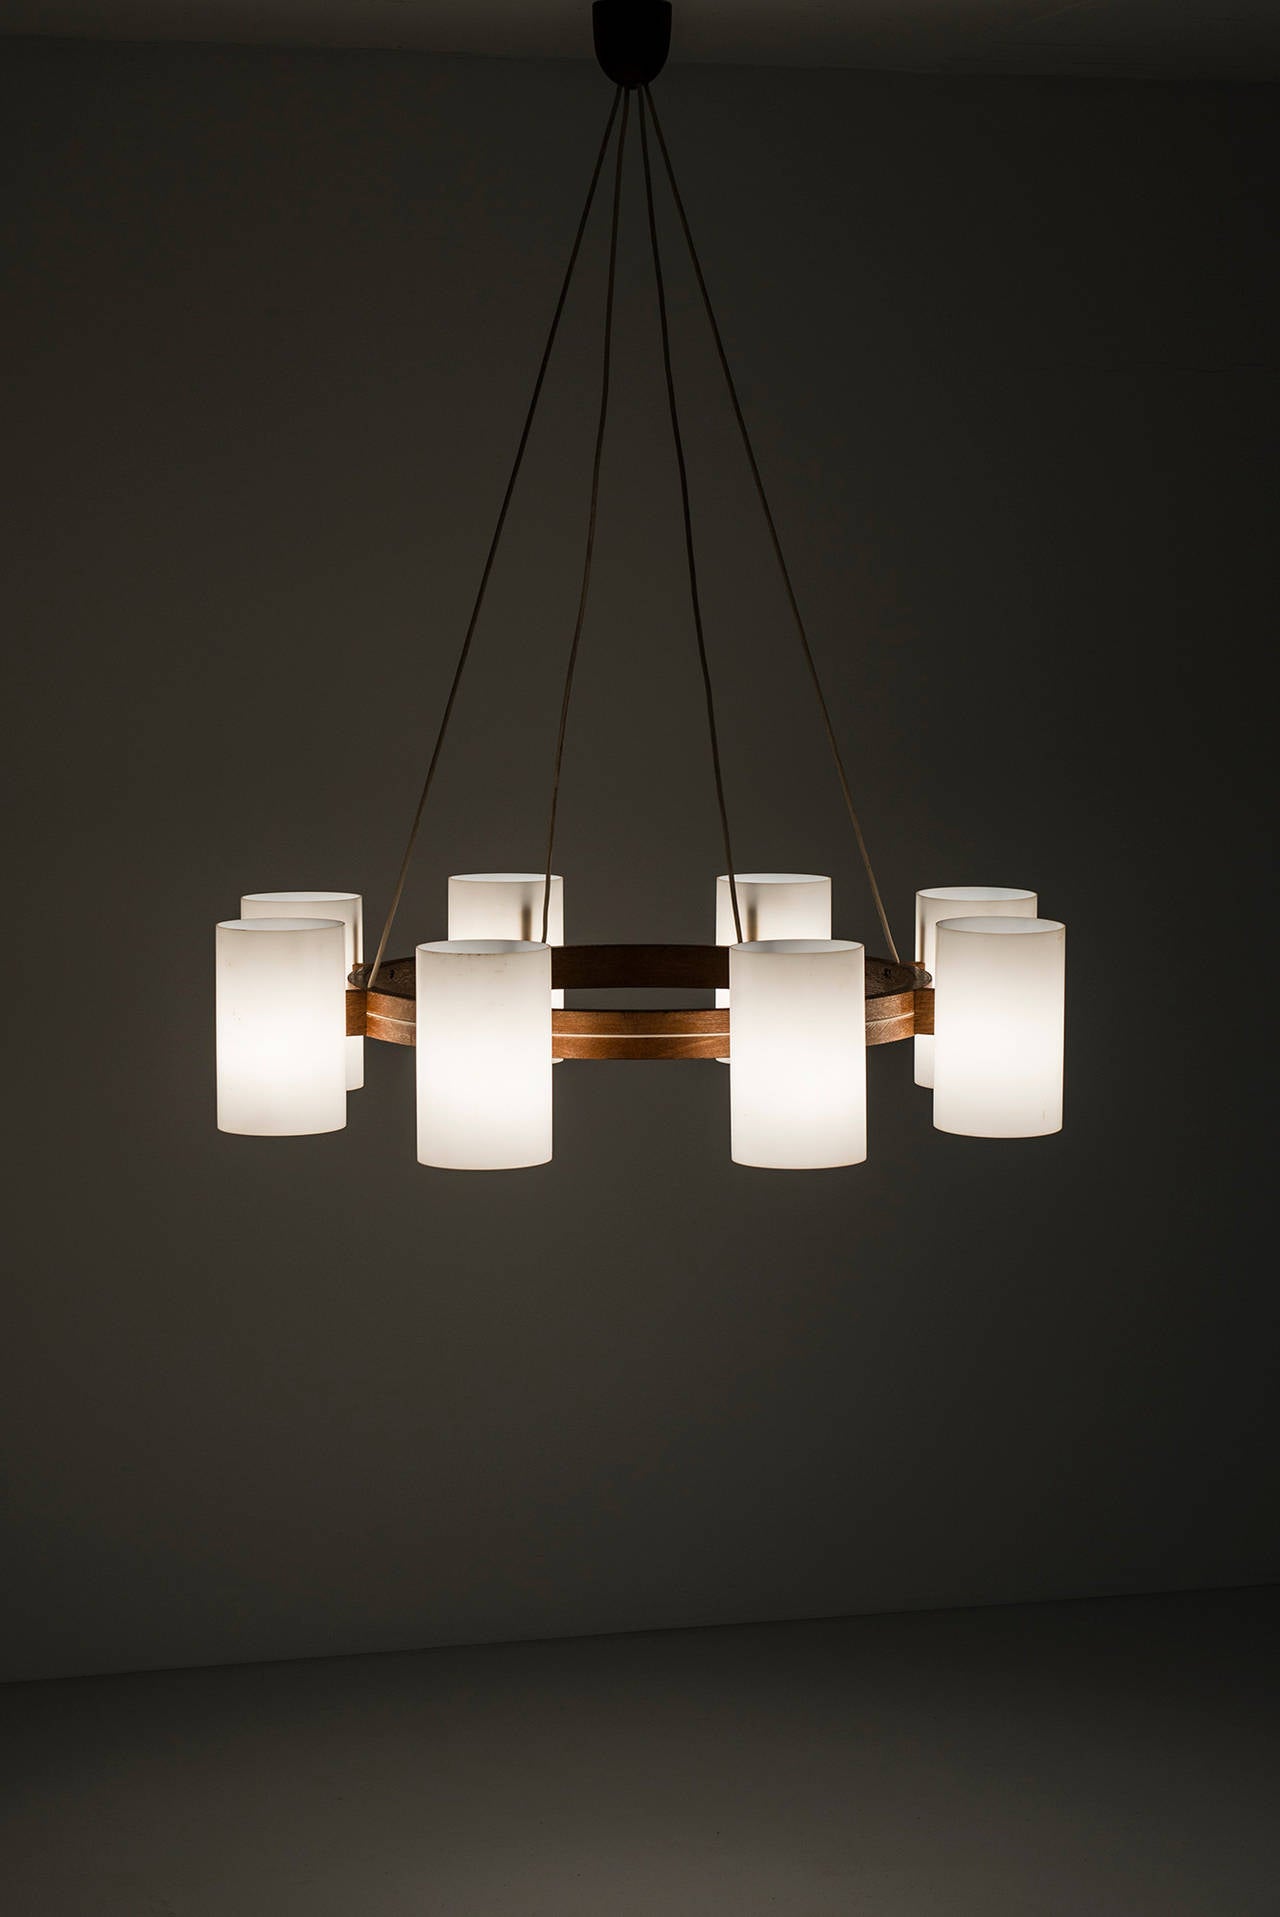 Big ceiling lamp model 587 designed by Uno & Östen Kristiansson. Produced by Luxus in Vittsjö, Sweden.